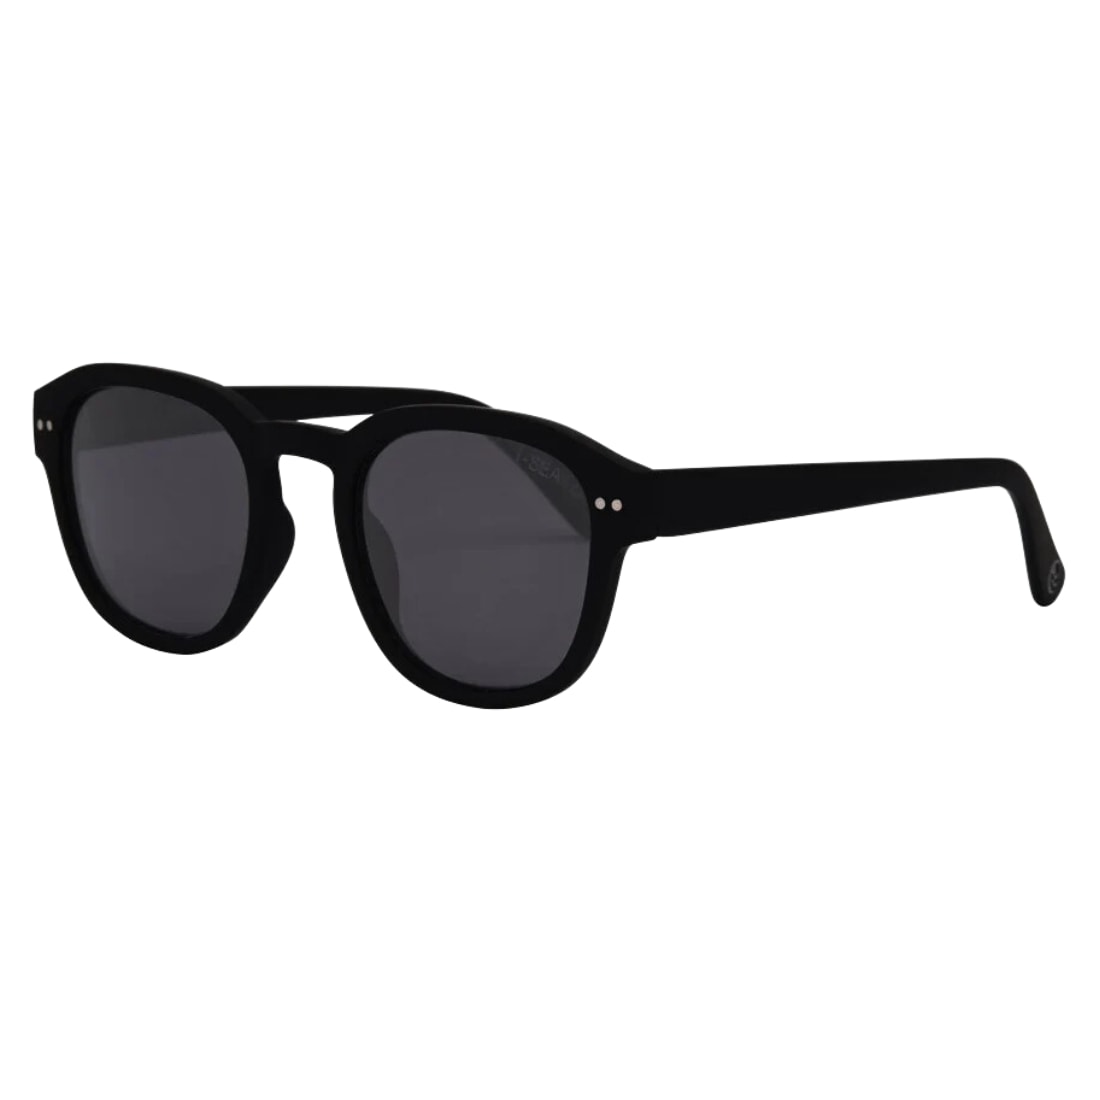 I-Sea Barton Round Polarised Sunglasses - Matt Black/Smoke Polarized Lens - Round Sunglasses by I-Sea